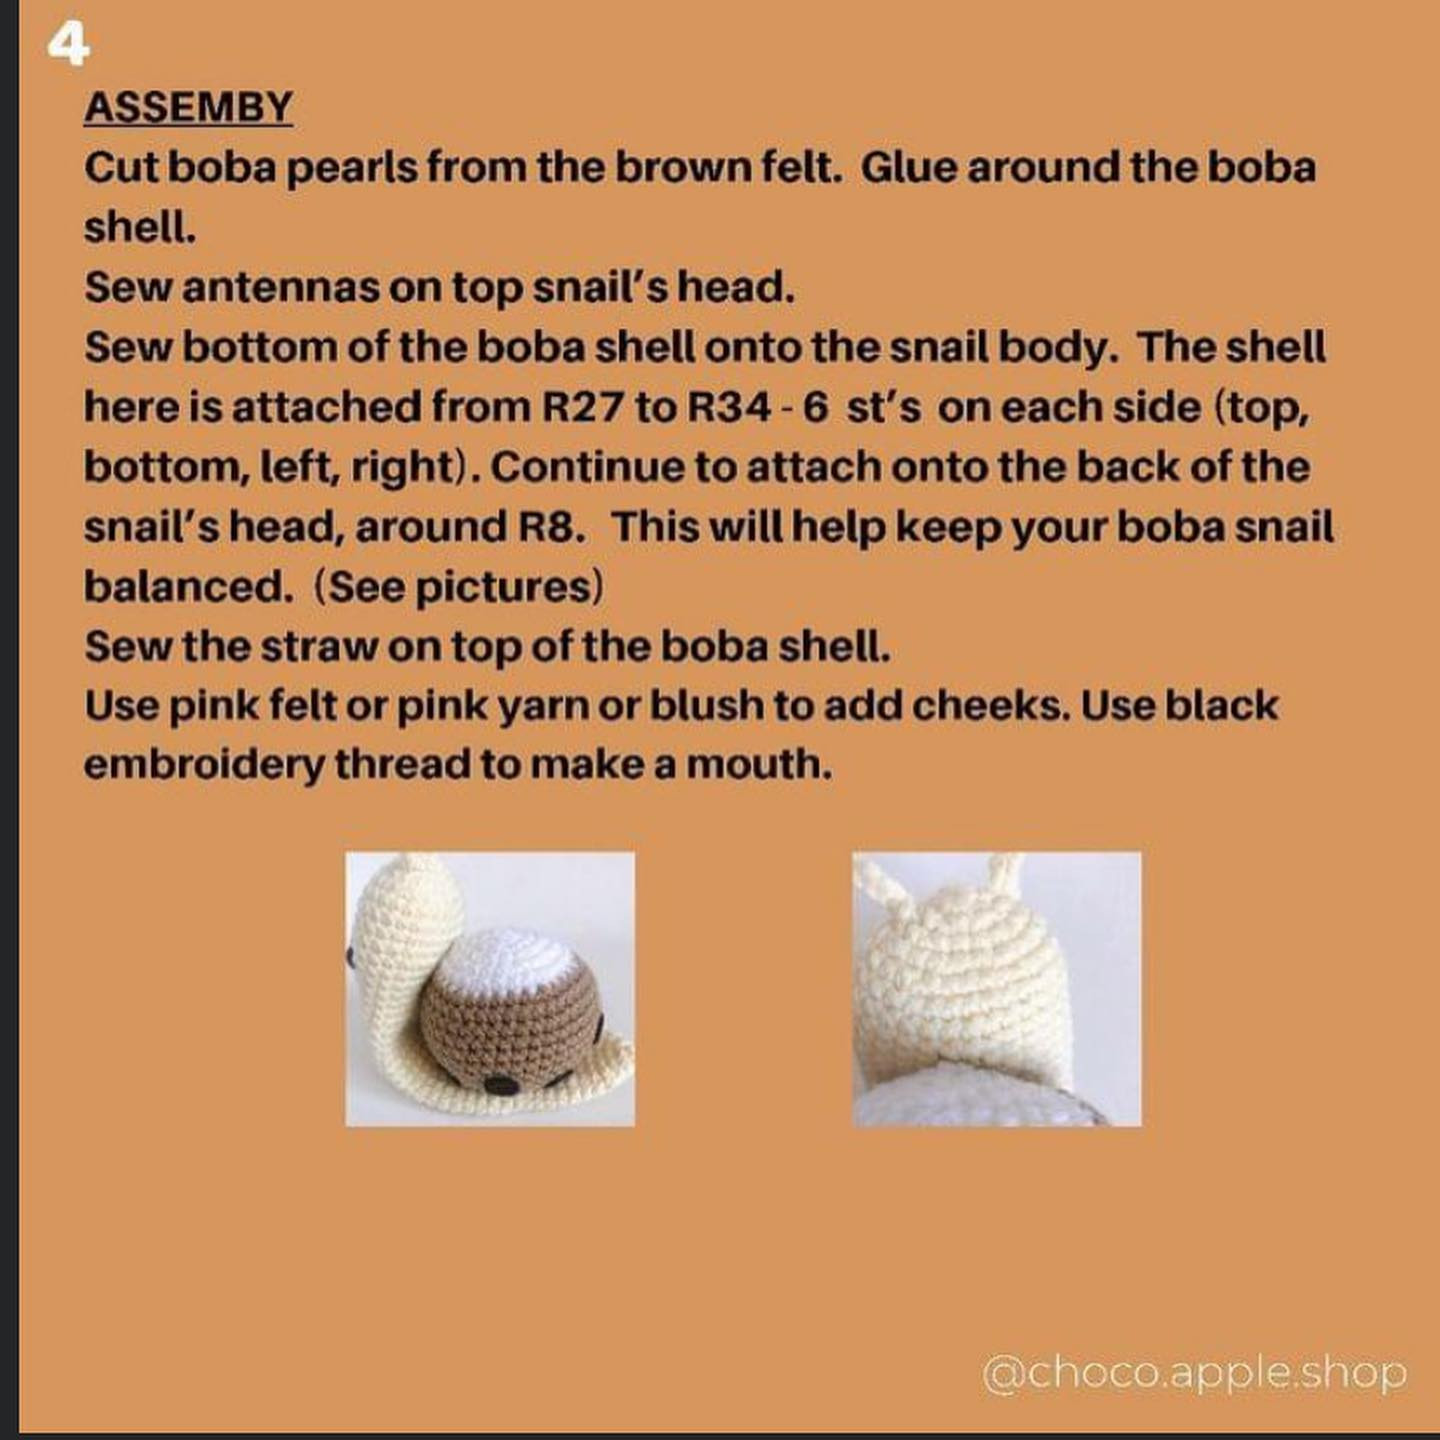 Boba snail crochet pattern